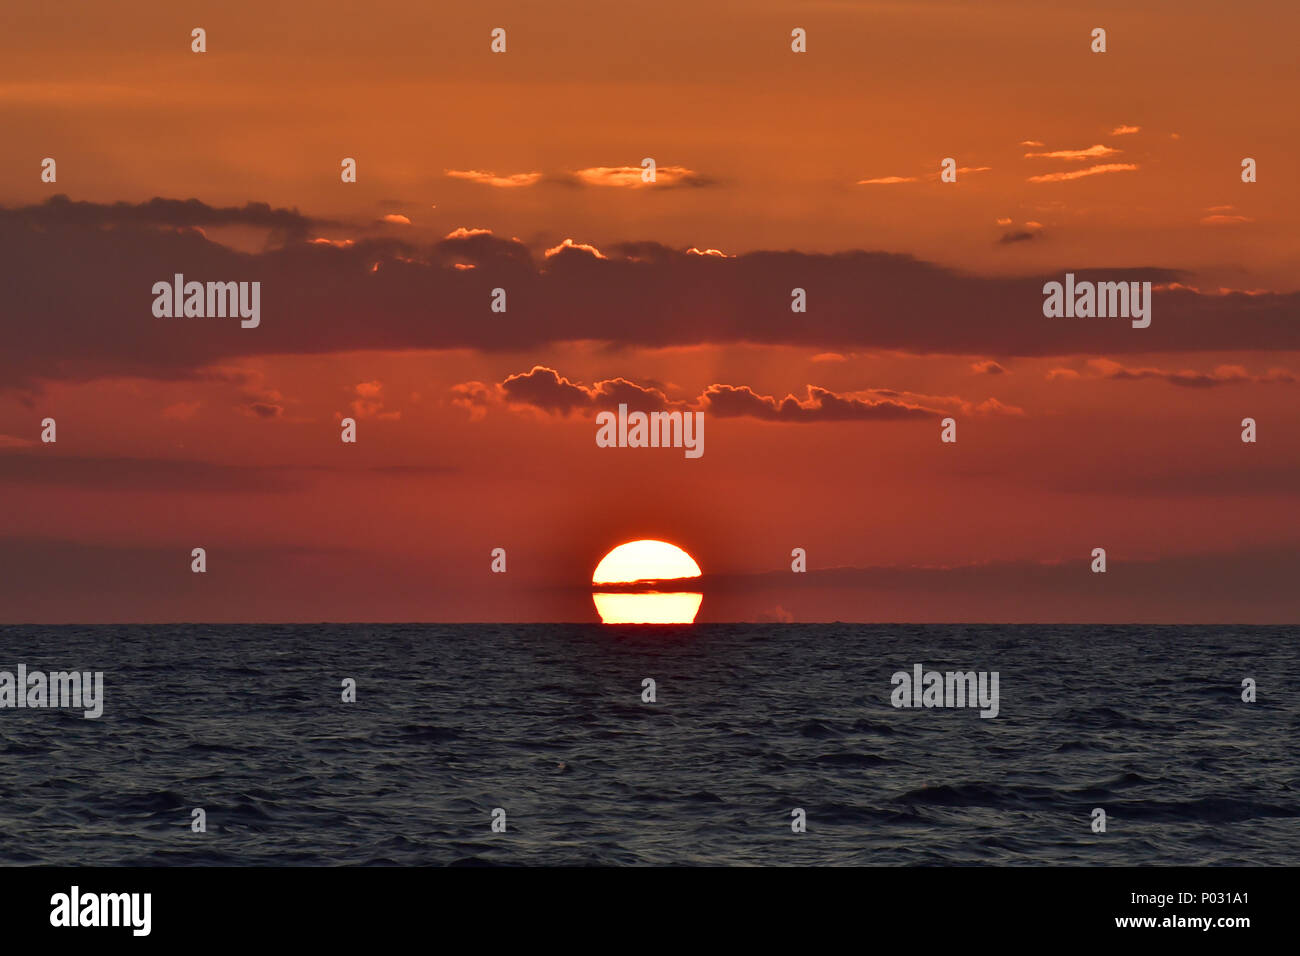 Sonnenaufgang/Sonnenuntergang am Meer mit bunten Himmel Stockfoto